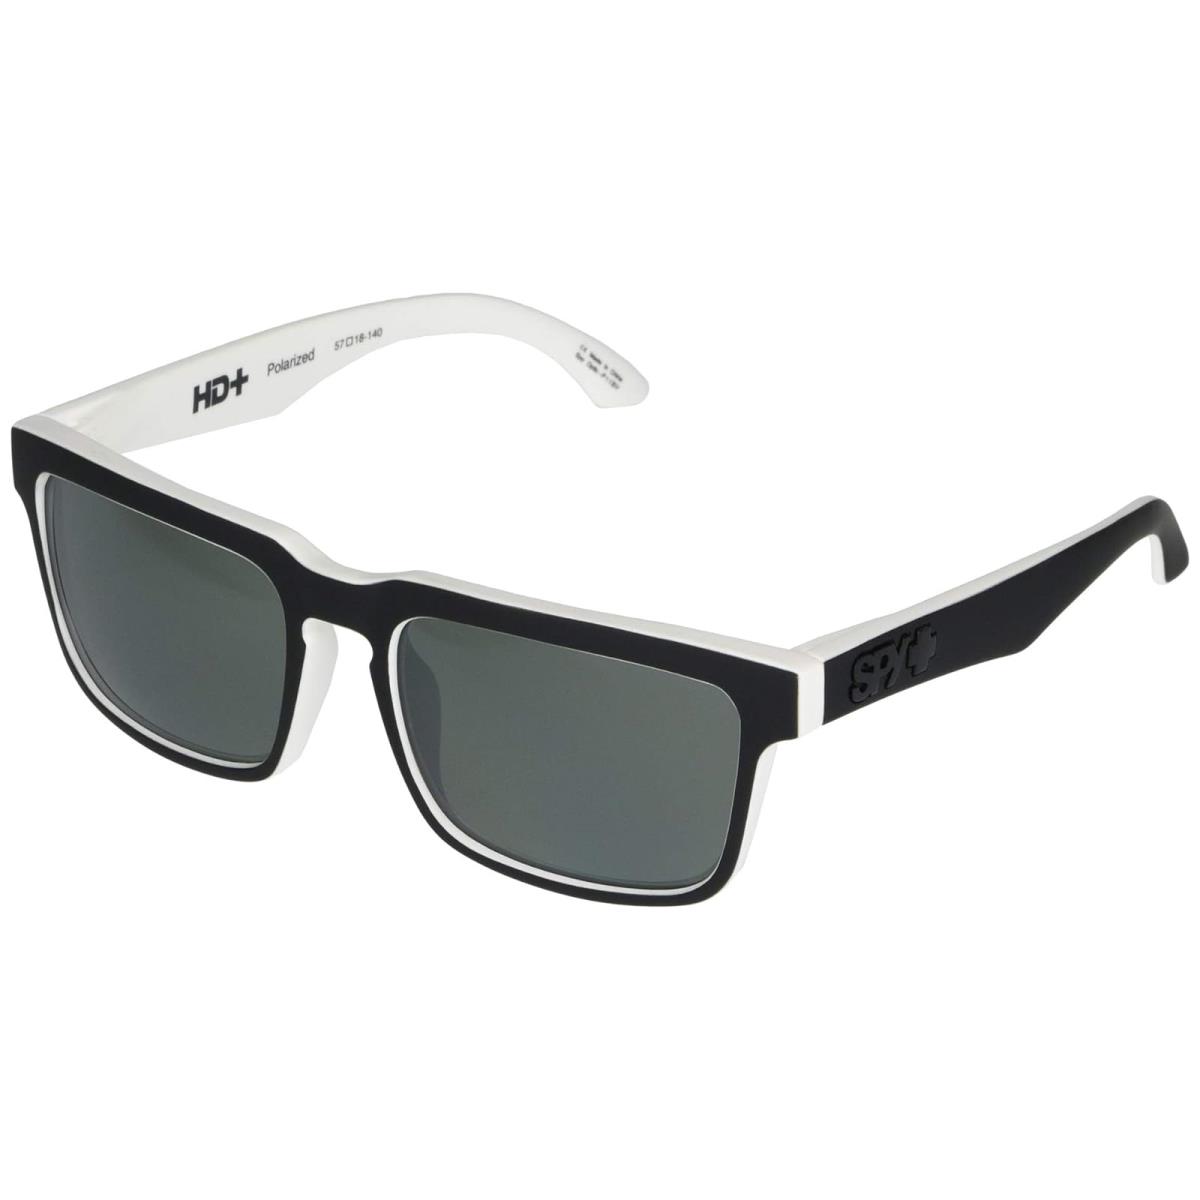 Unisex Sunglasses Spy Optic Helm Whitewall/HD Plus Gray Green/Black Spectra Mirror